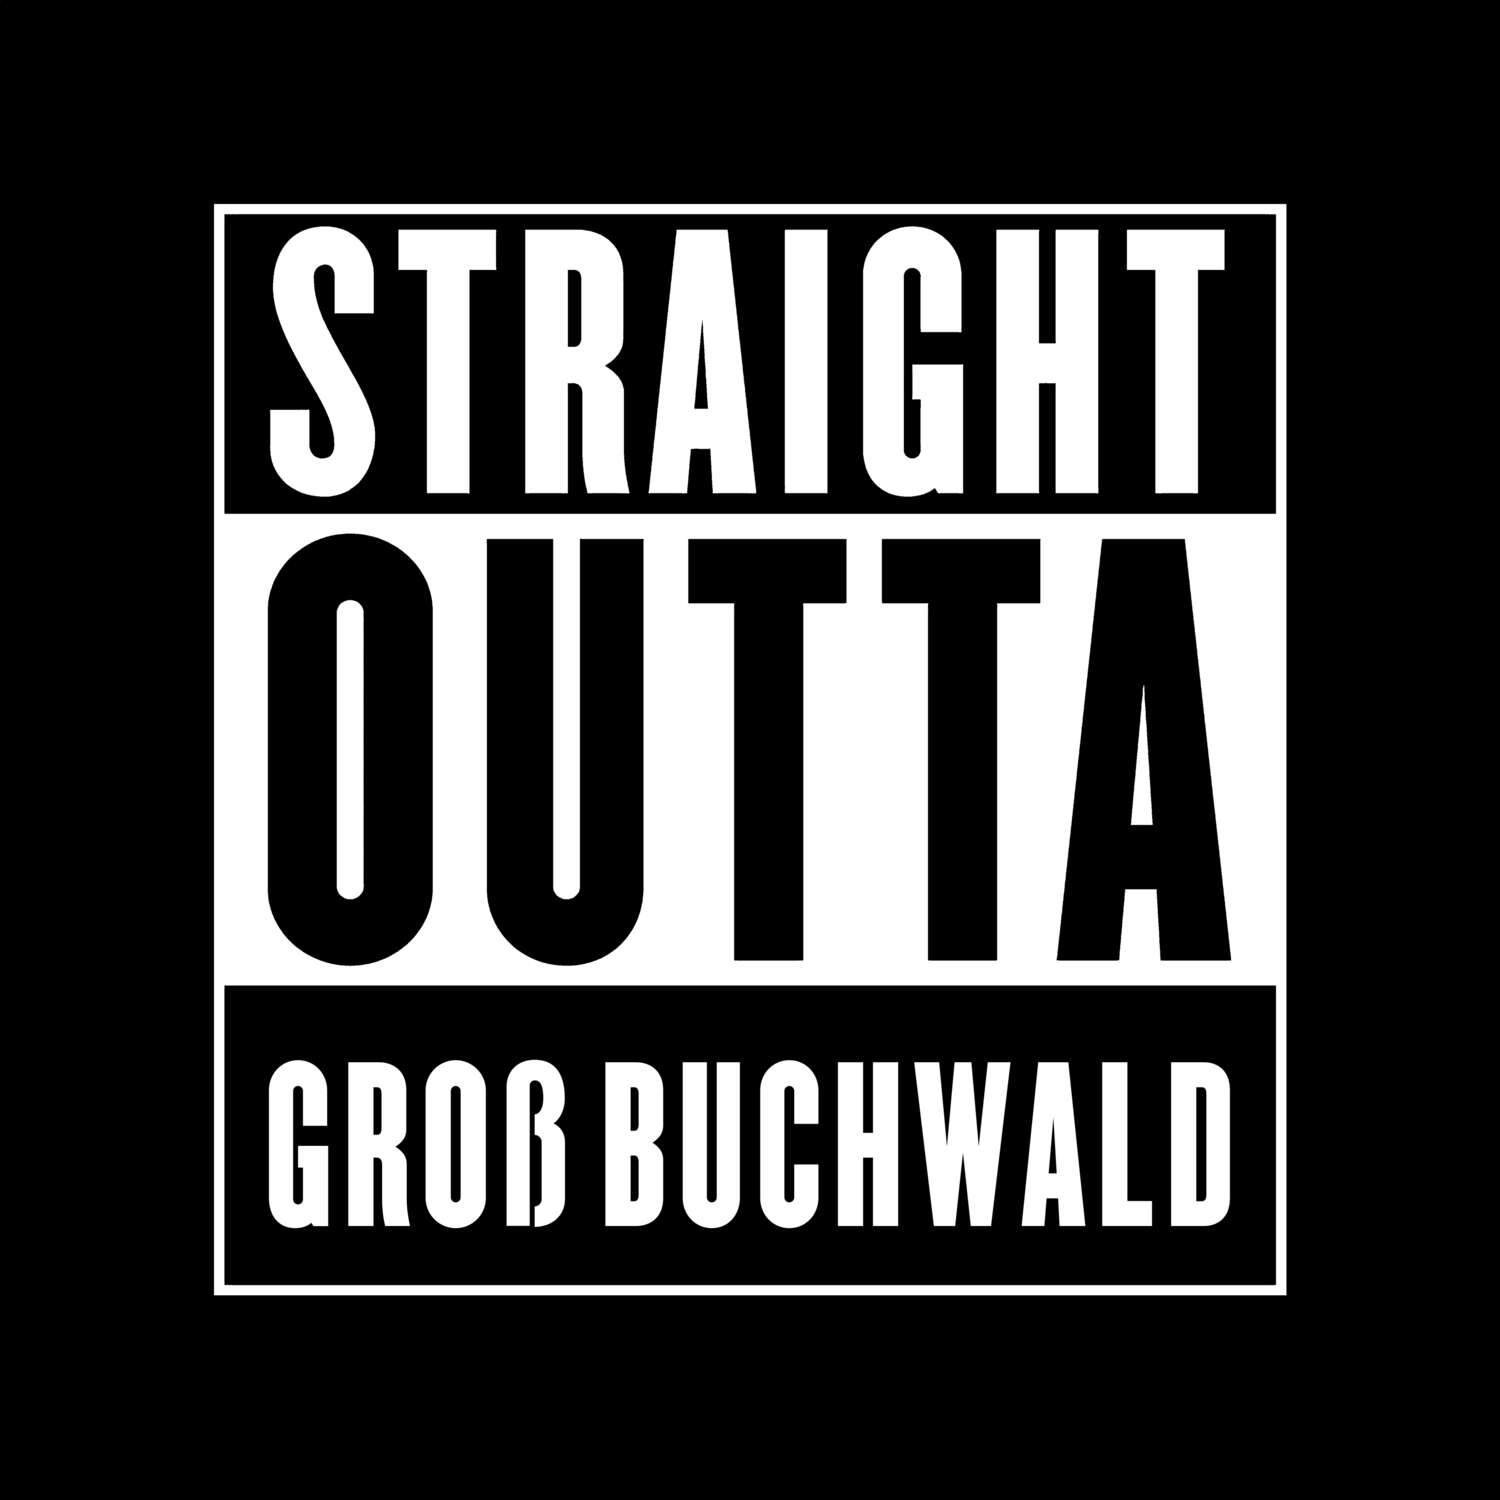 Groß Buchwald T-Shirt »Straight Outta«